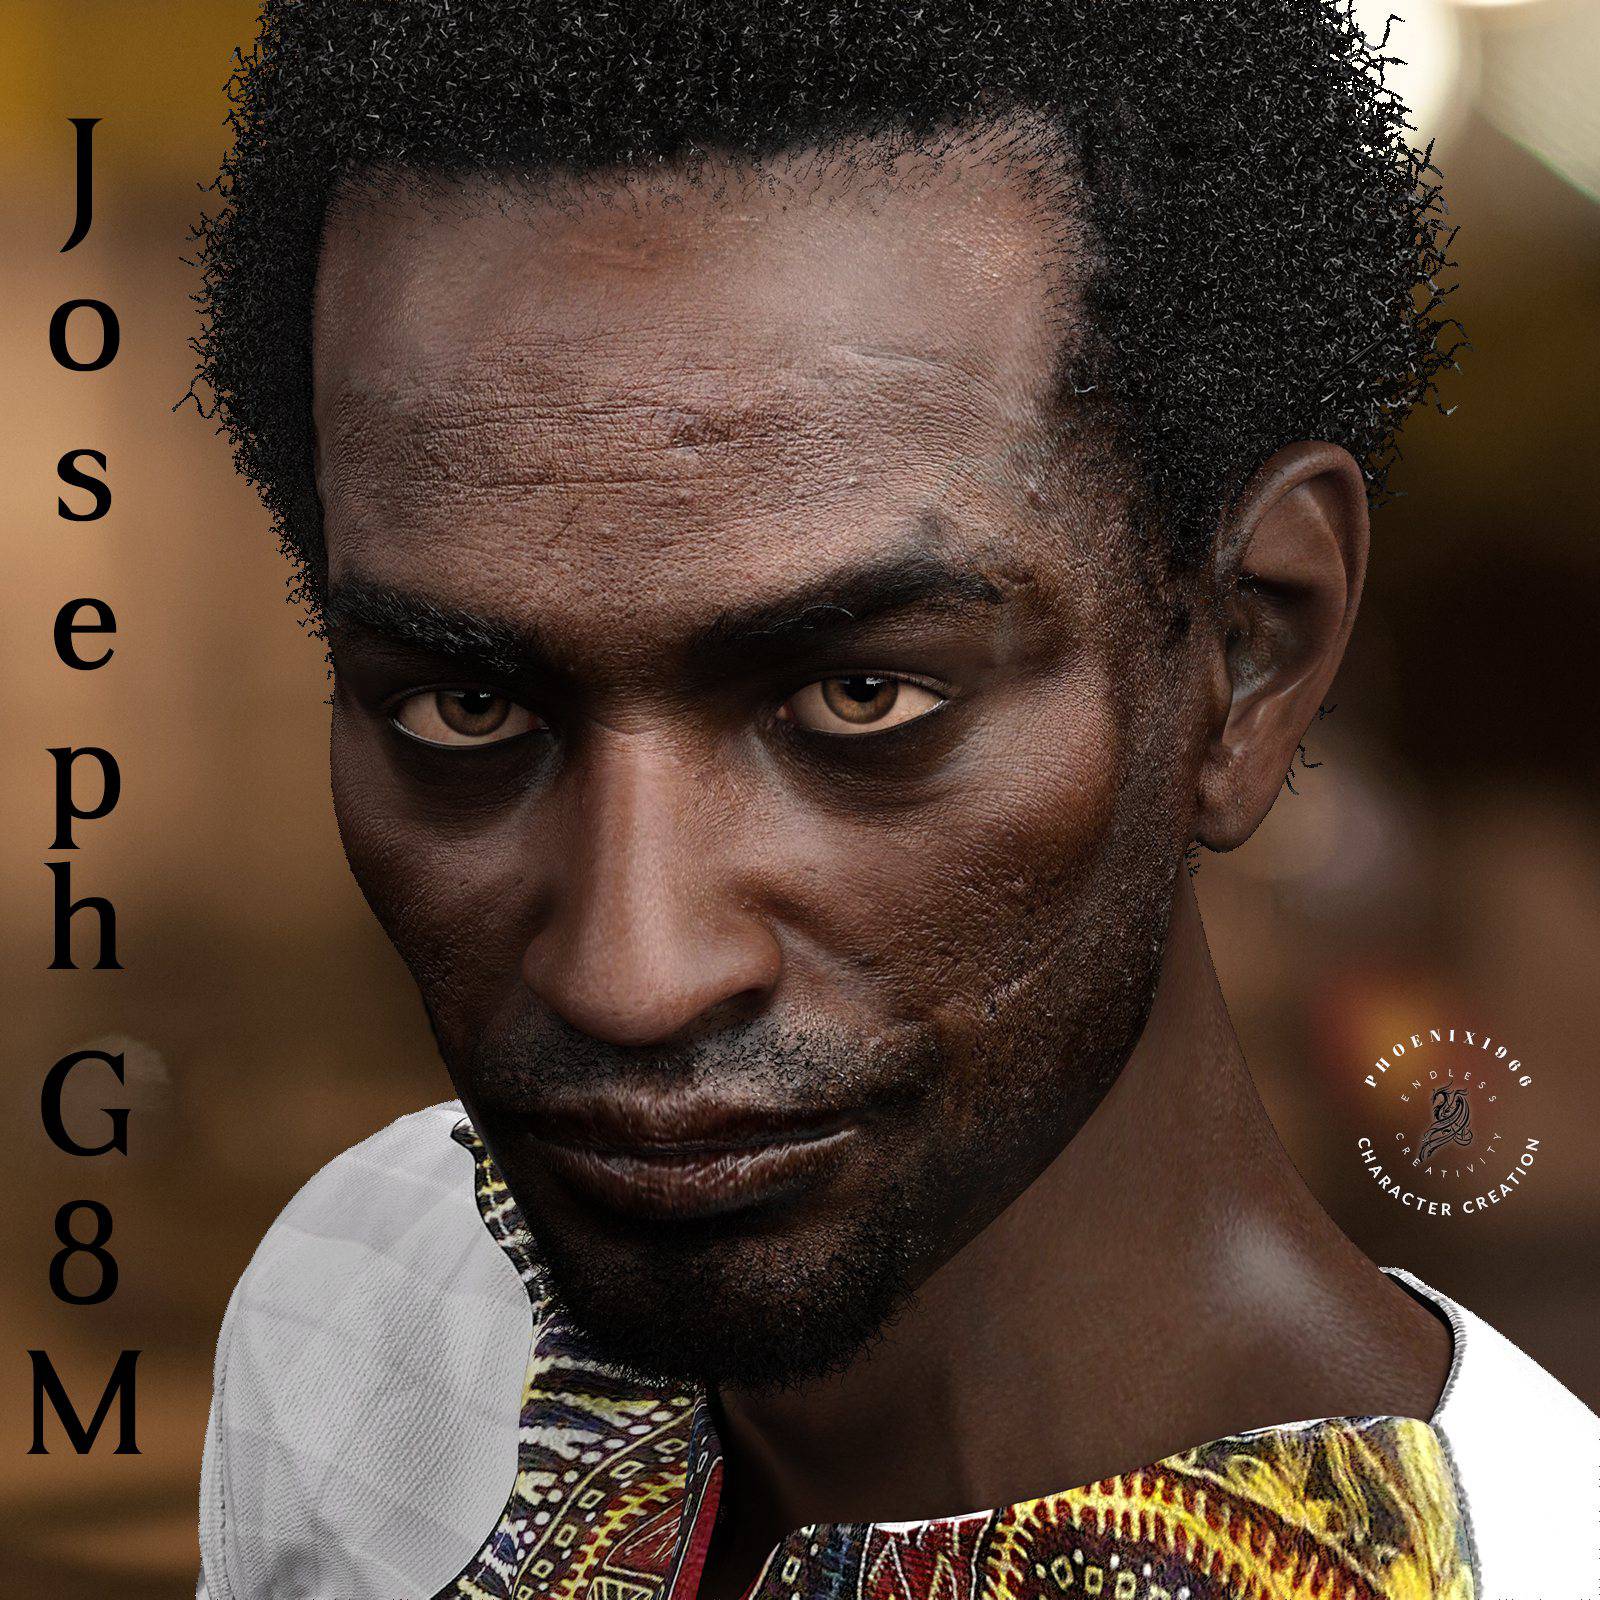 Phx Joseph for Genesis 8 Male_DAZ3D下载站